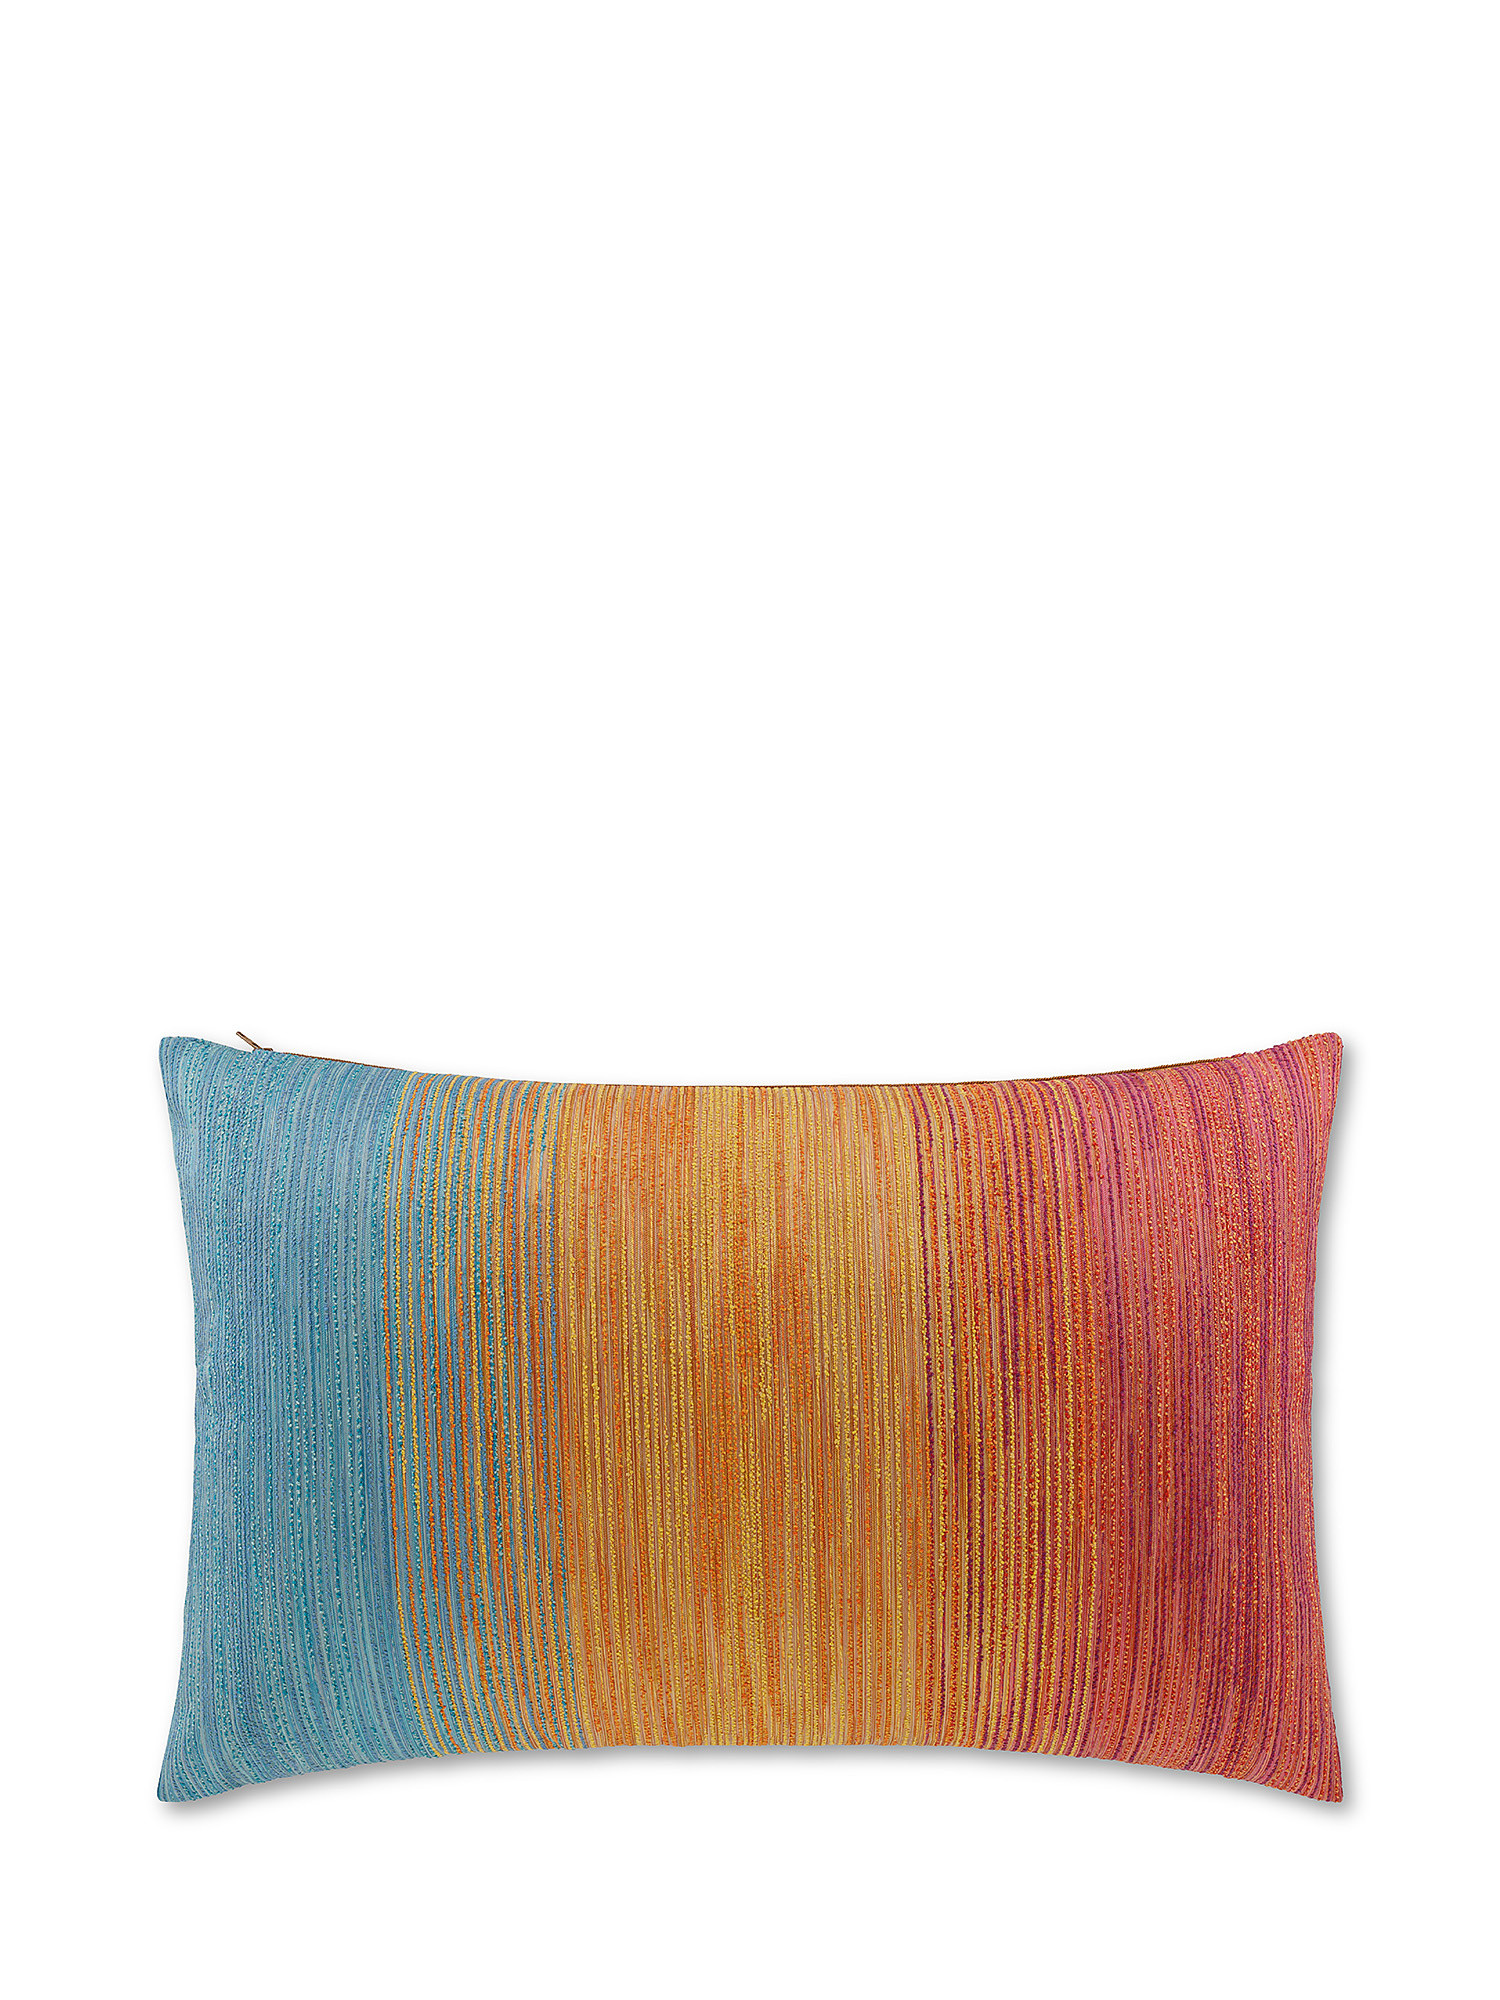 Shaded jacquard cushion 35x55cm, Multicolor, large image number 0